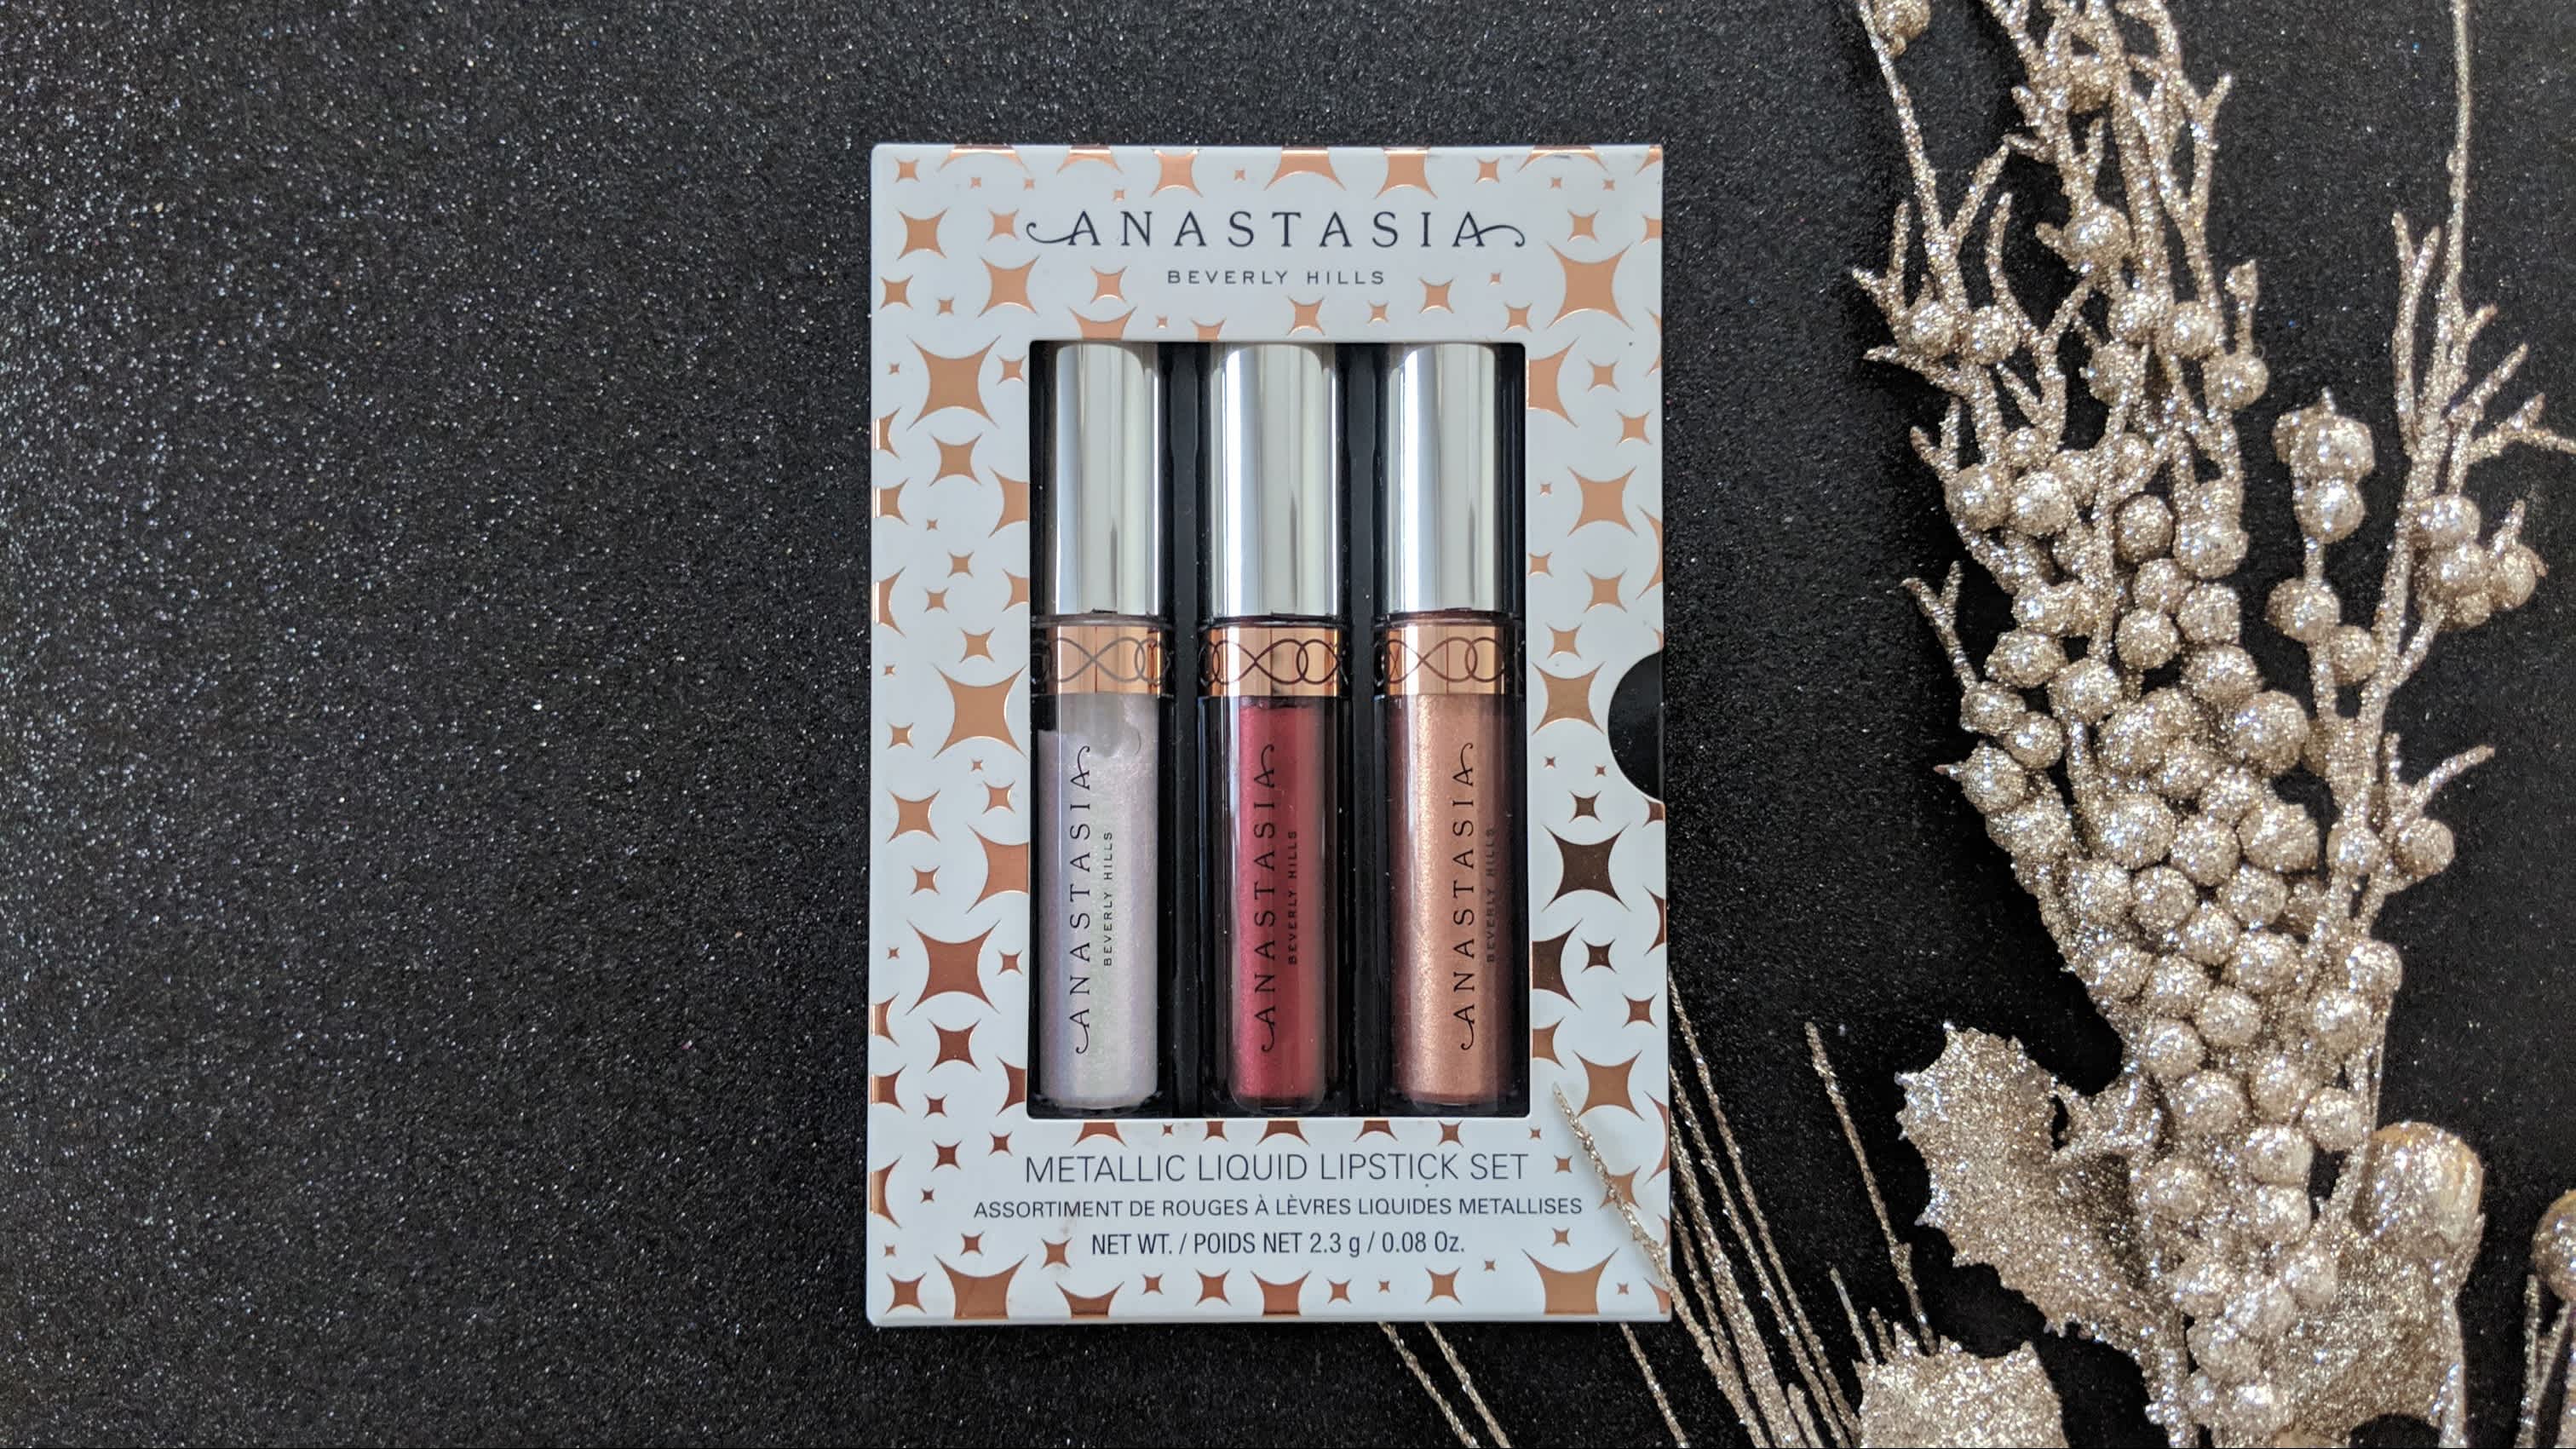 Anastasia Beverly Hills Mini Metallic Liquid Lipstick Set Review